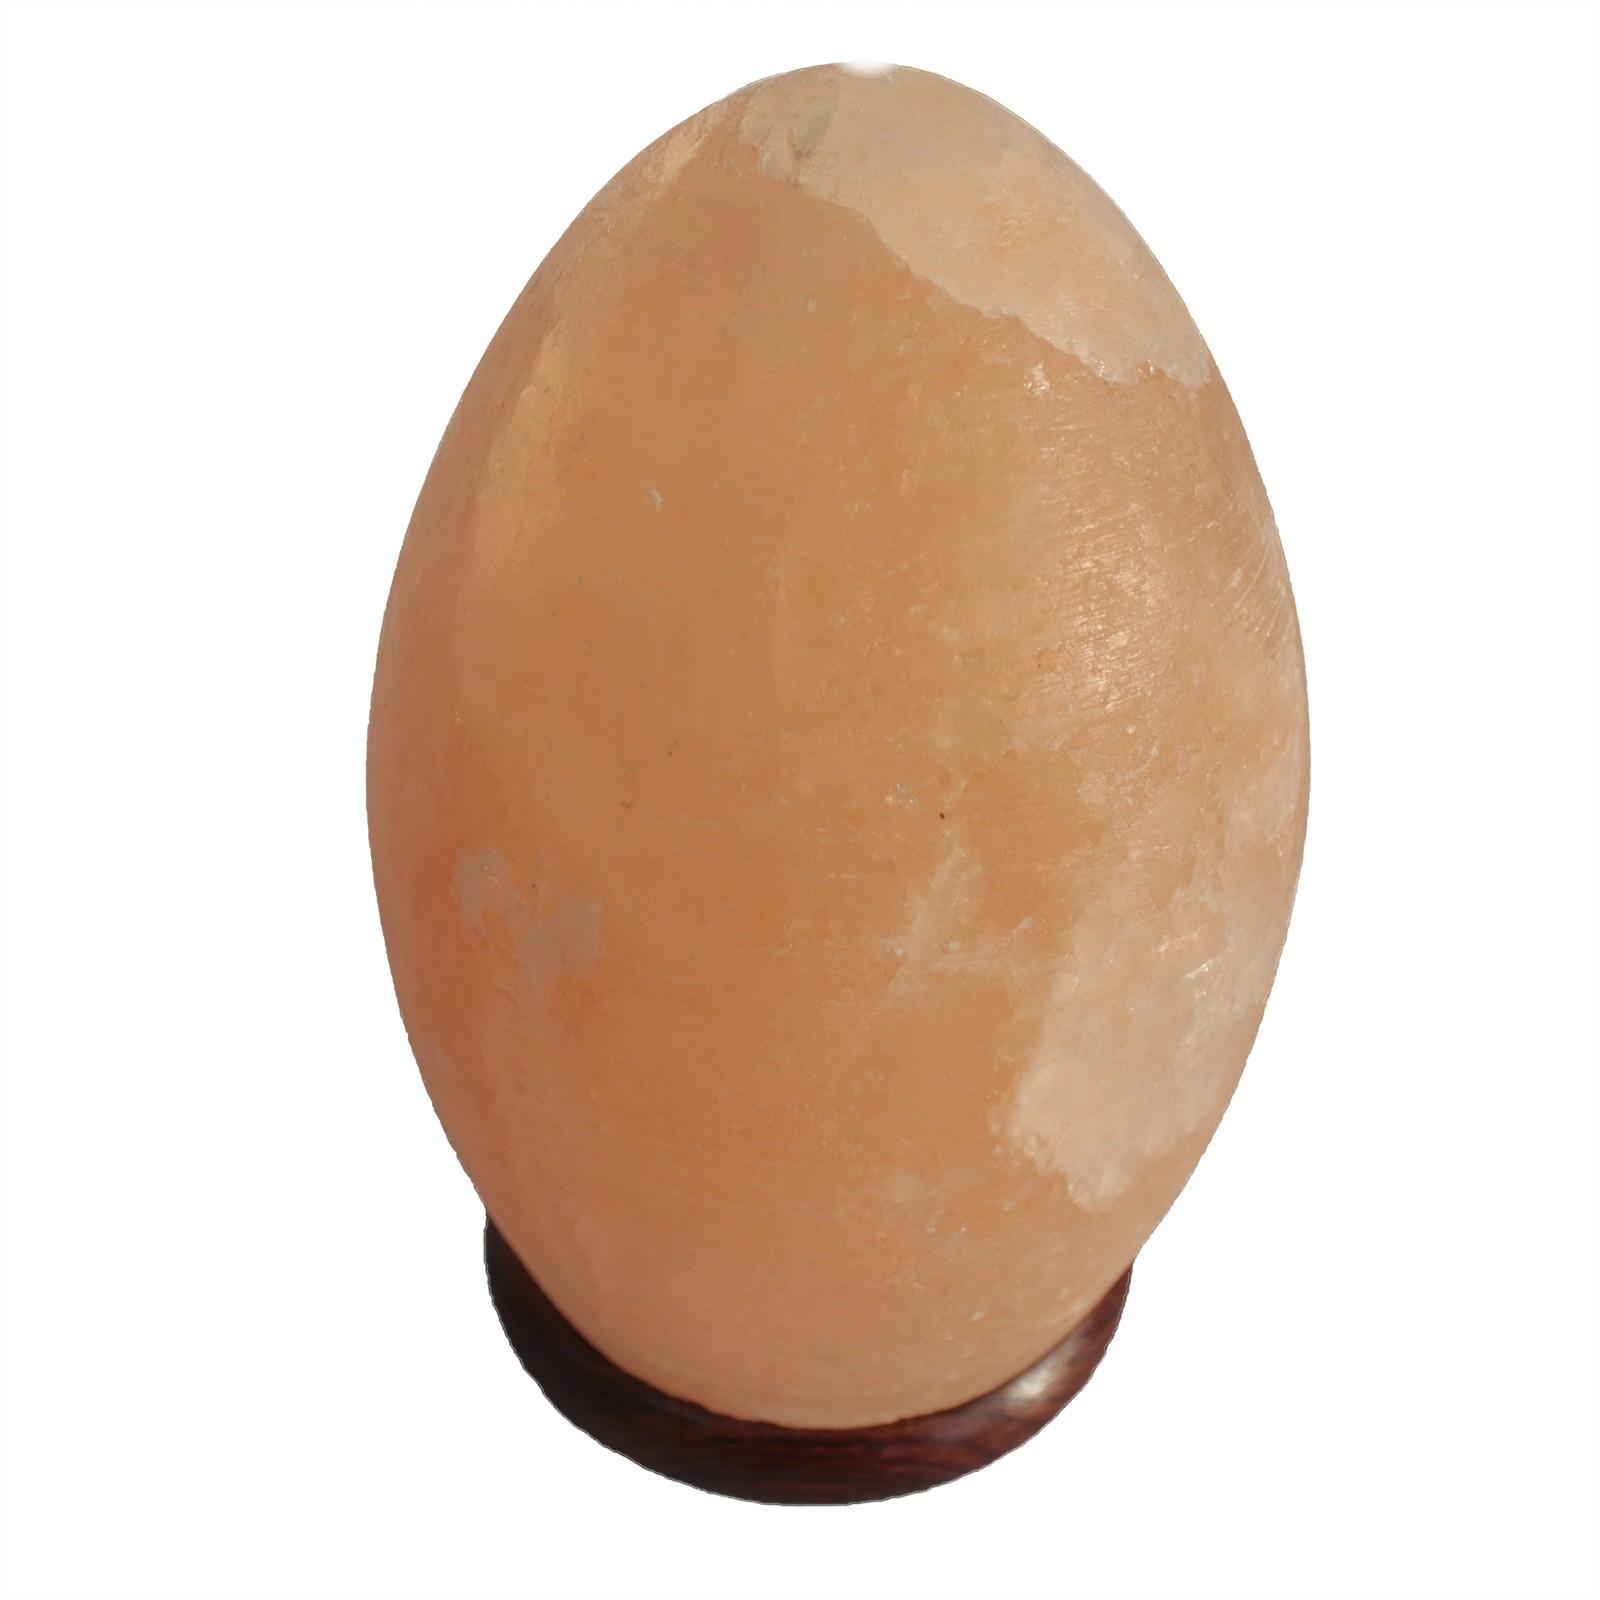 Himalayan Salt Lamp Egg with Wooden Base